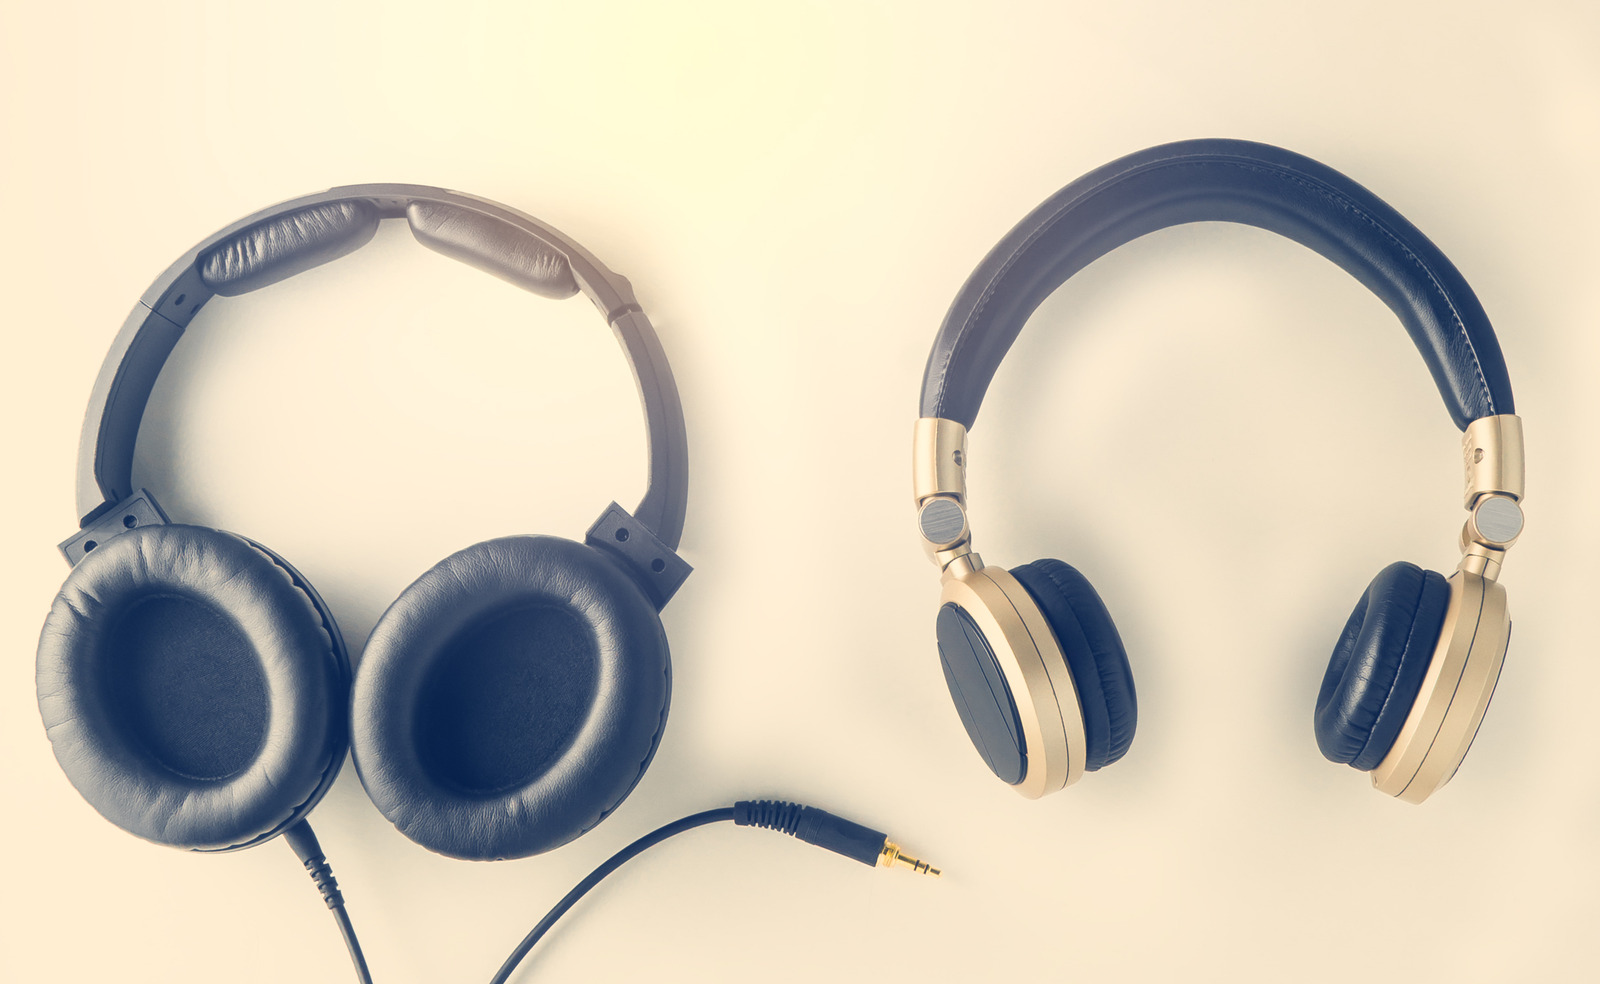 Wired headphone and wireless headphone